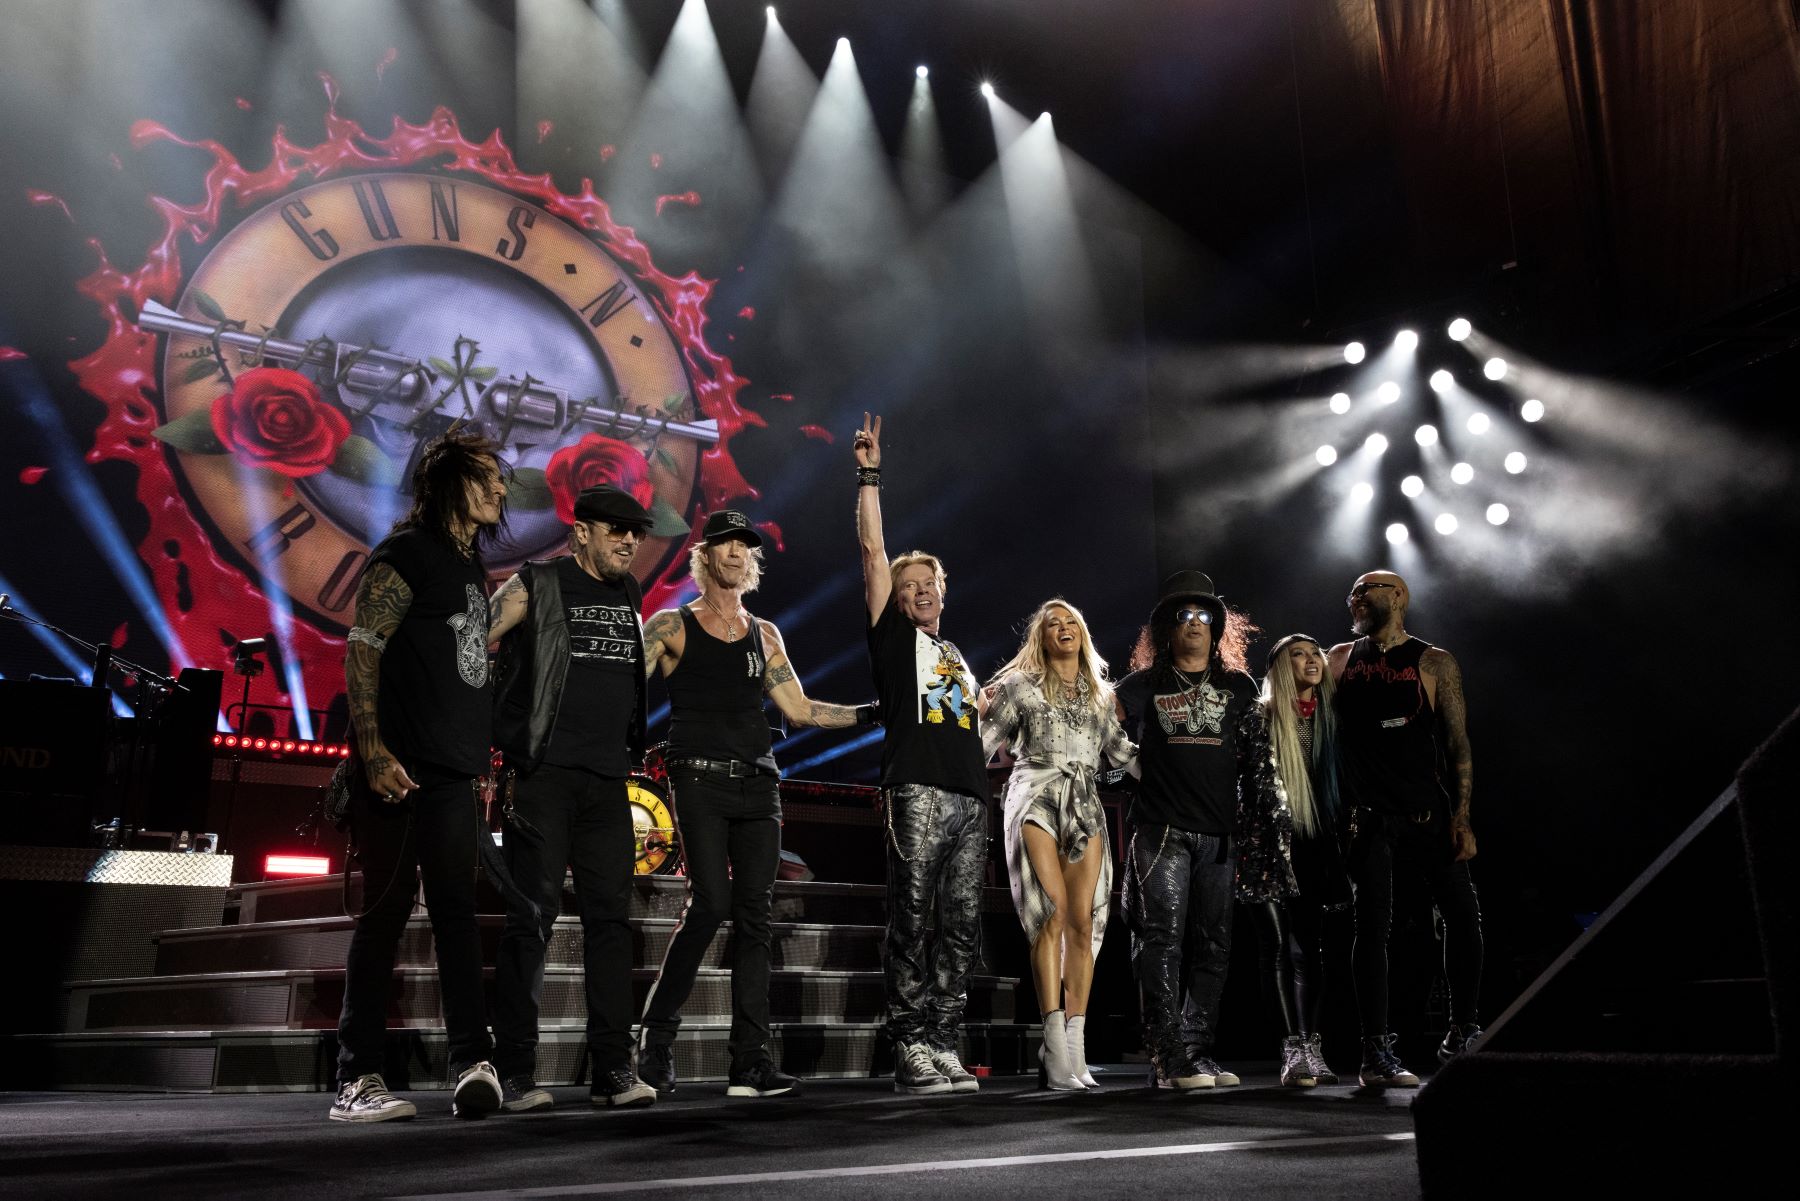 Guns N' Roses announce 2023 world tour, including San Diego